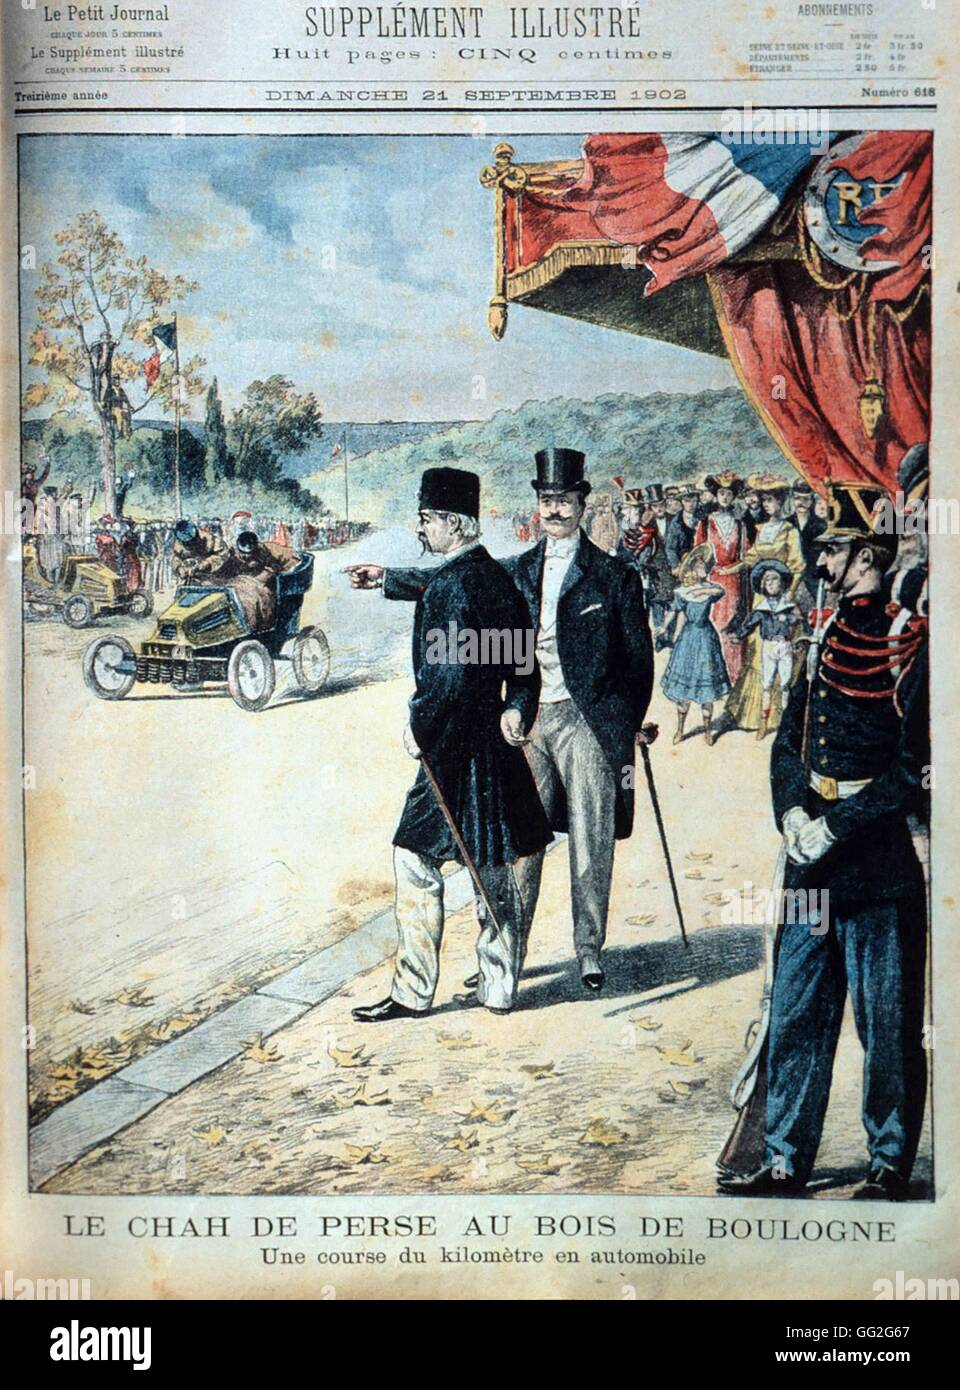 The Shah of Persia, Mozaffar ad-Din Shah Qajar, at the Bois de Boulogne, Paris, attending an automobile race in. 'Le Petit Journal' September 21, 1902. Stock Photo